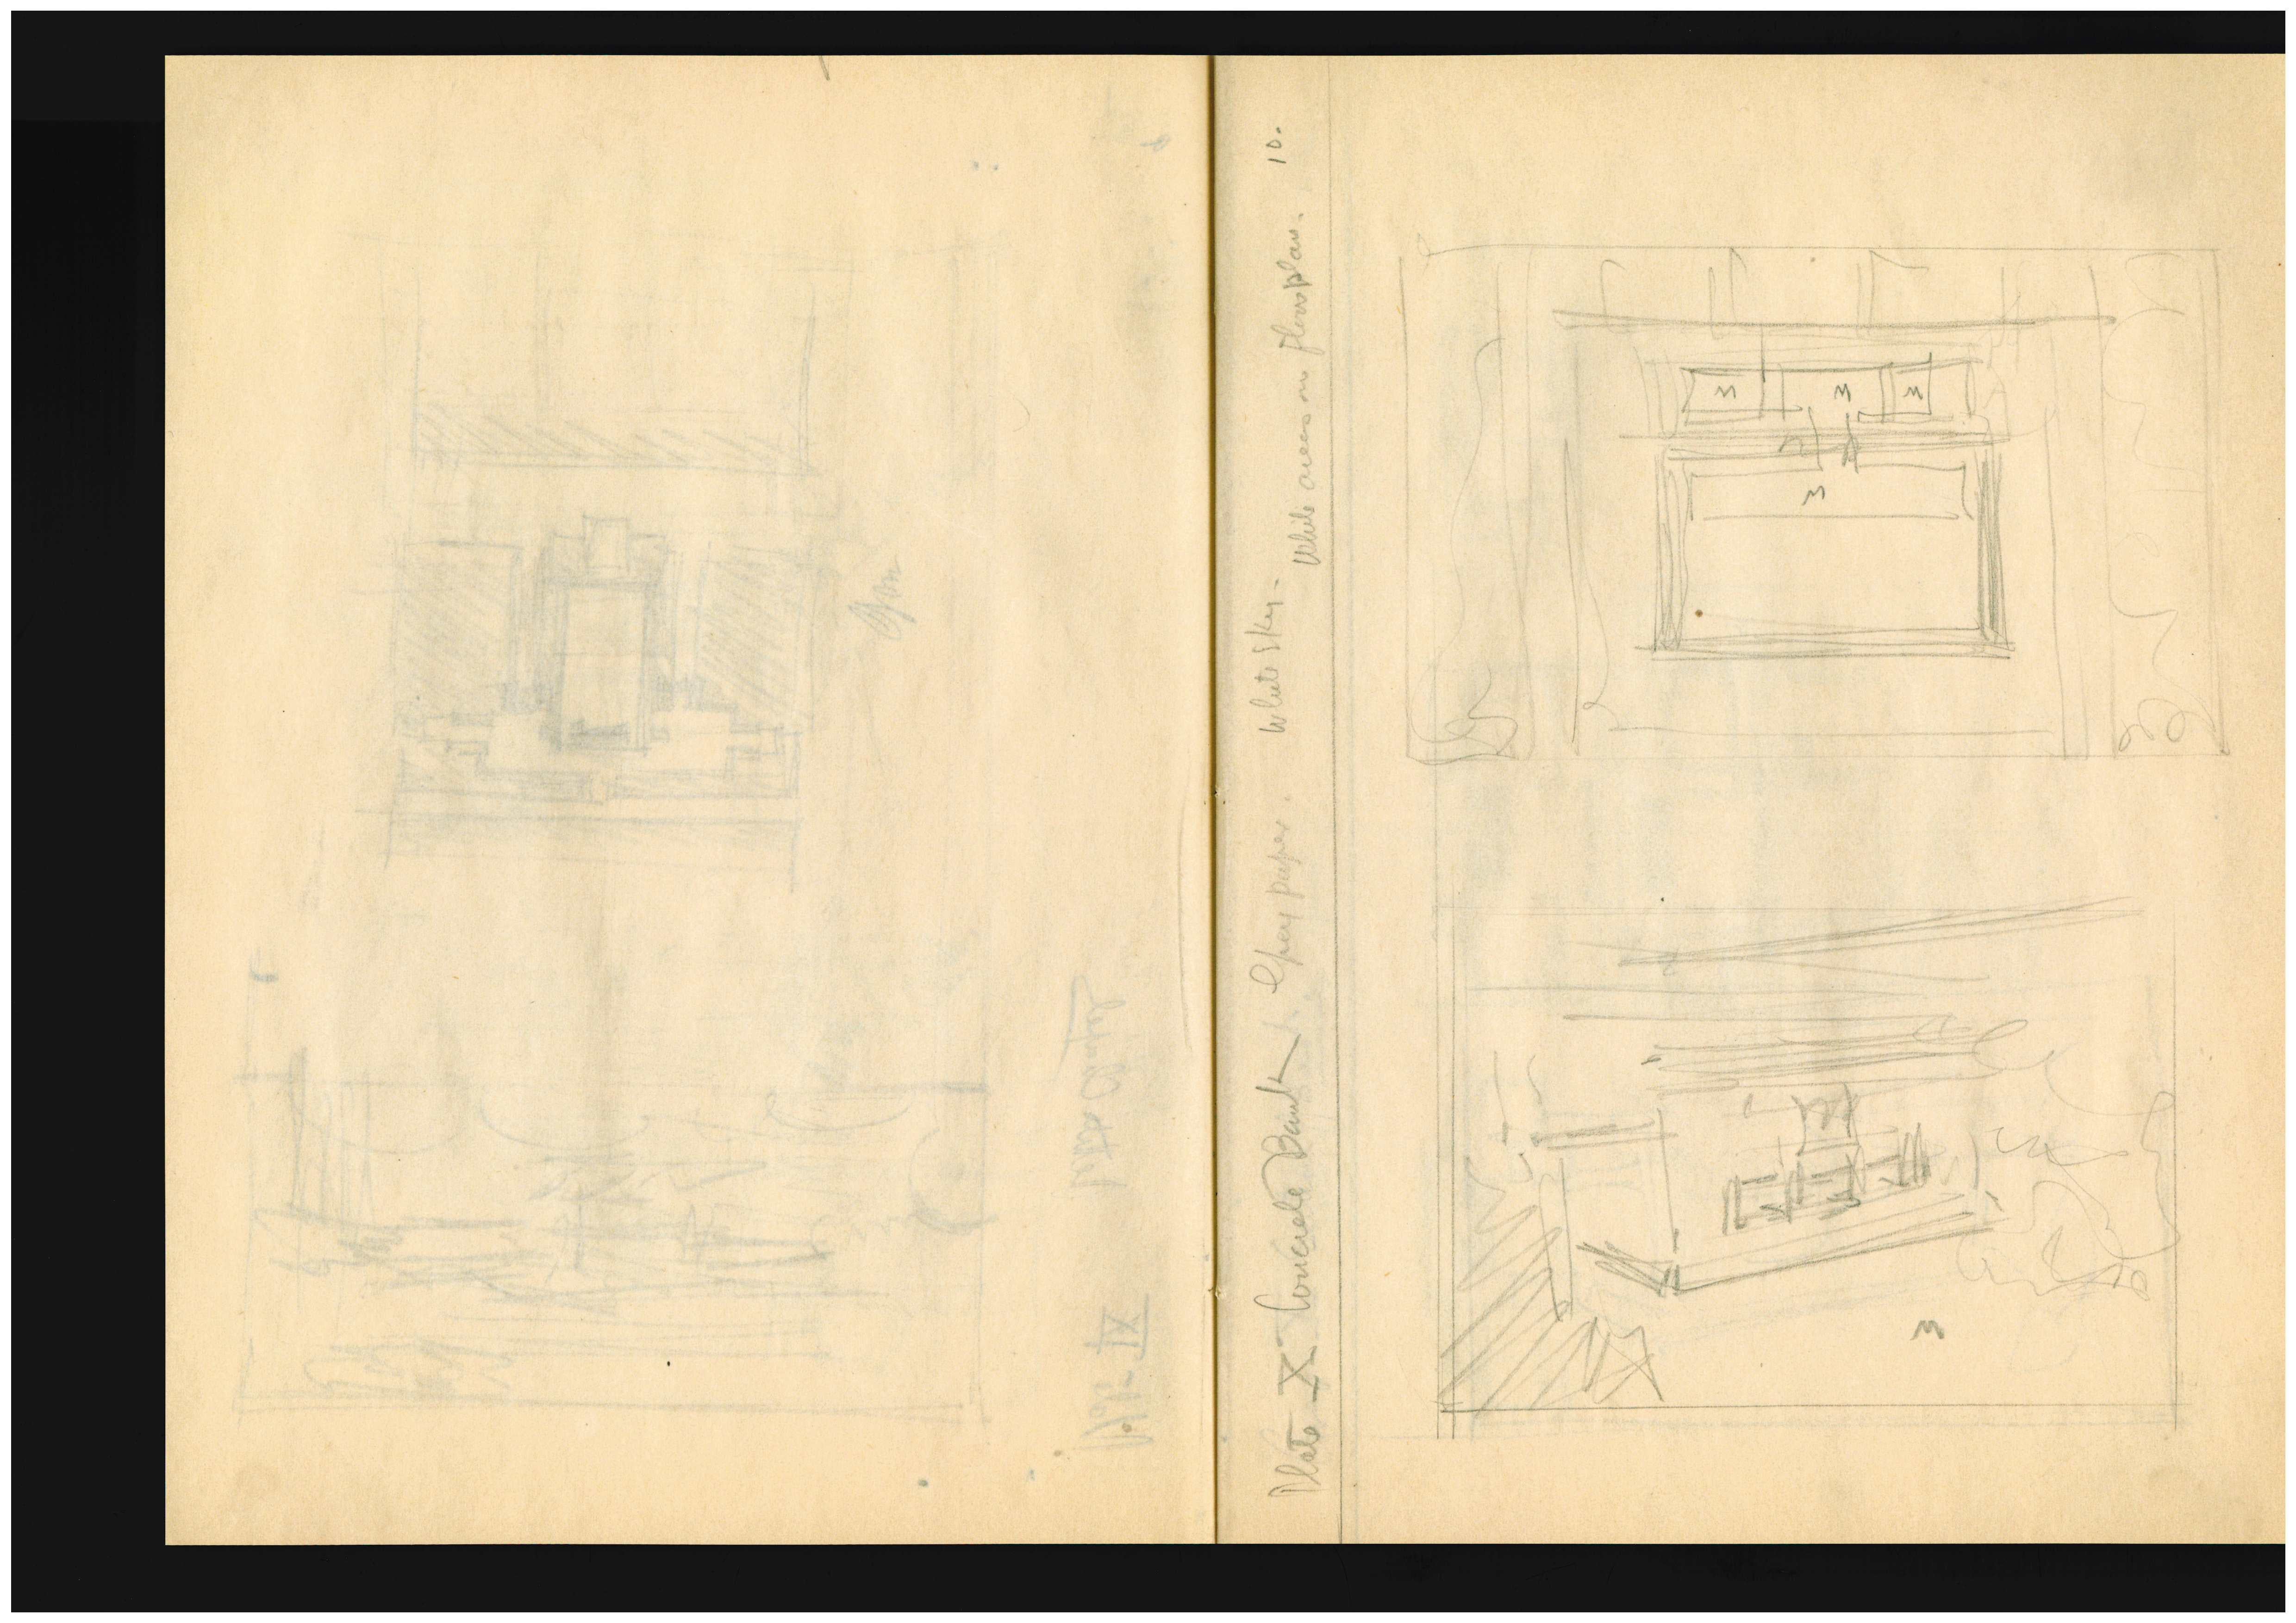 Paper Florence Sketchbook of Frank Lloyd Wright (Book) For Sale